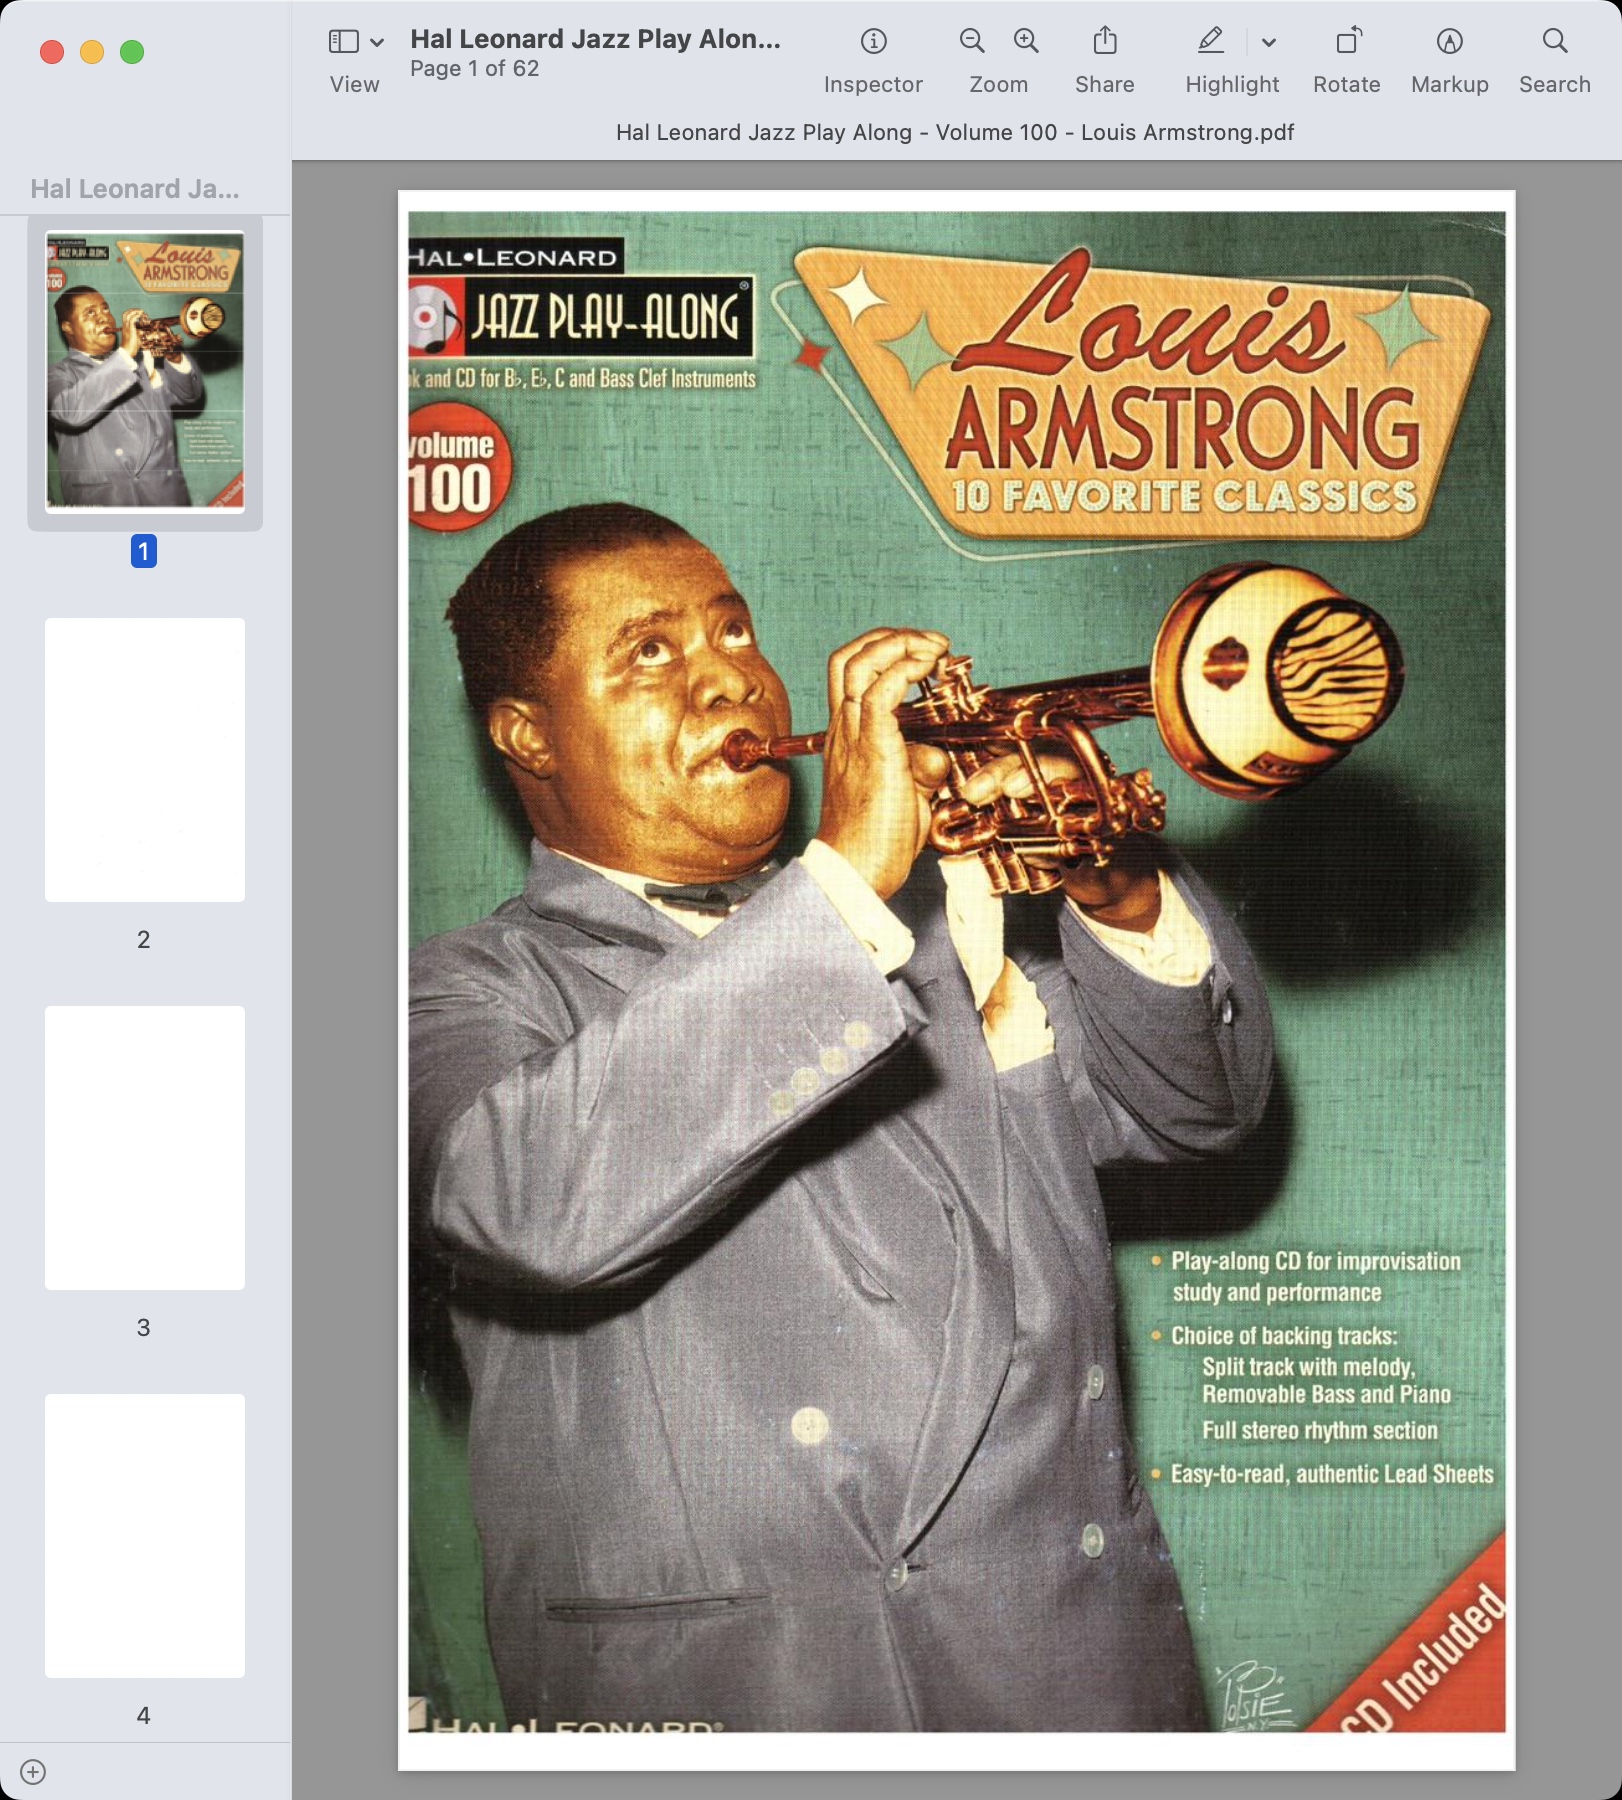 Hal Leonard Jazz Play Along - Volume 100 - Louis Armstrong.jpg